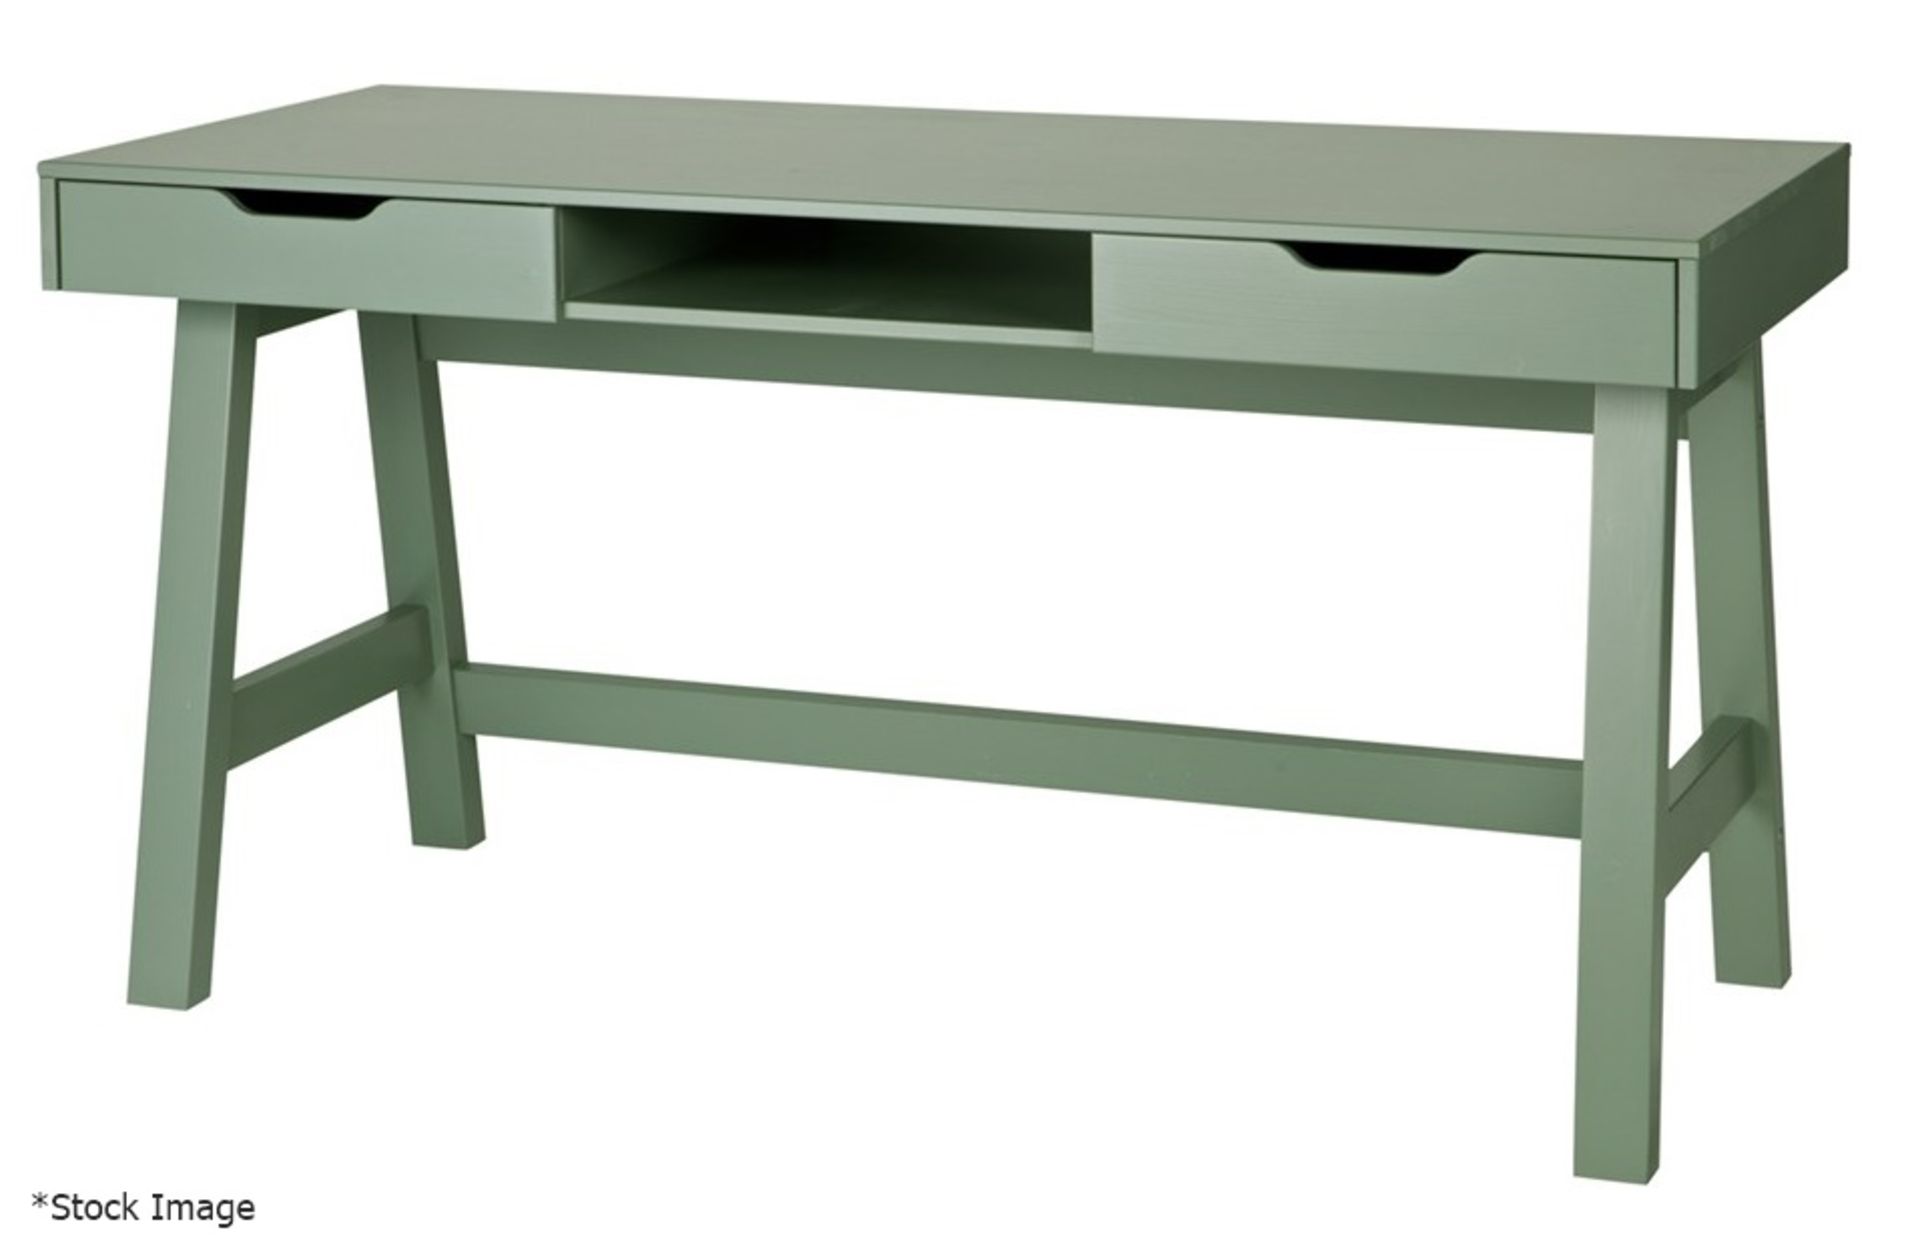 1 x WOOOD 'Nikki' Desk In Pale Sage Green - Original Price £385.00 - Made In Holland - Sealed - Image 2 of 5